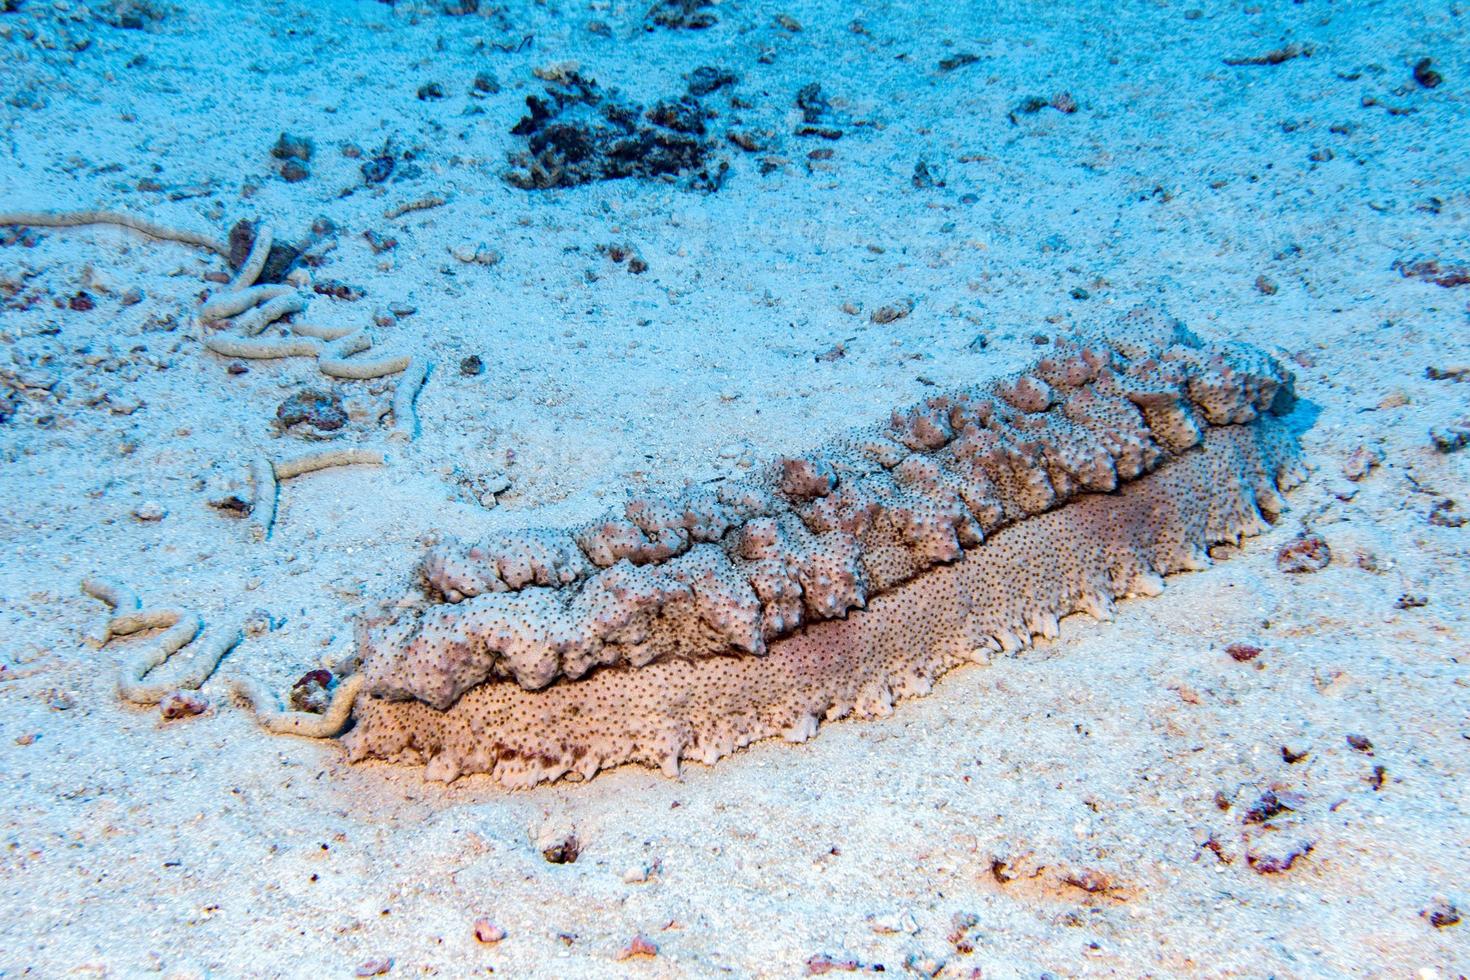 Holoturian sea cucumber close up portrait in maldives photo